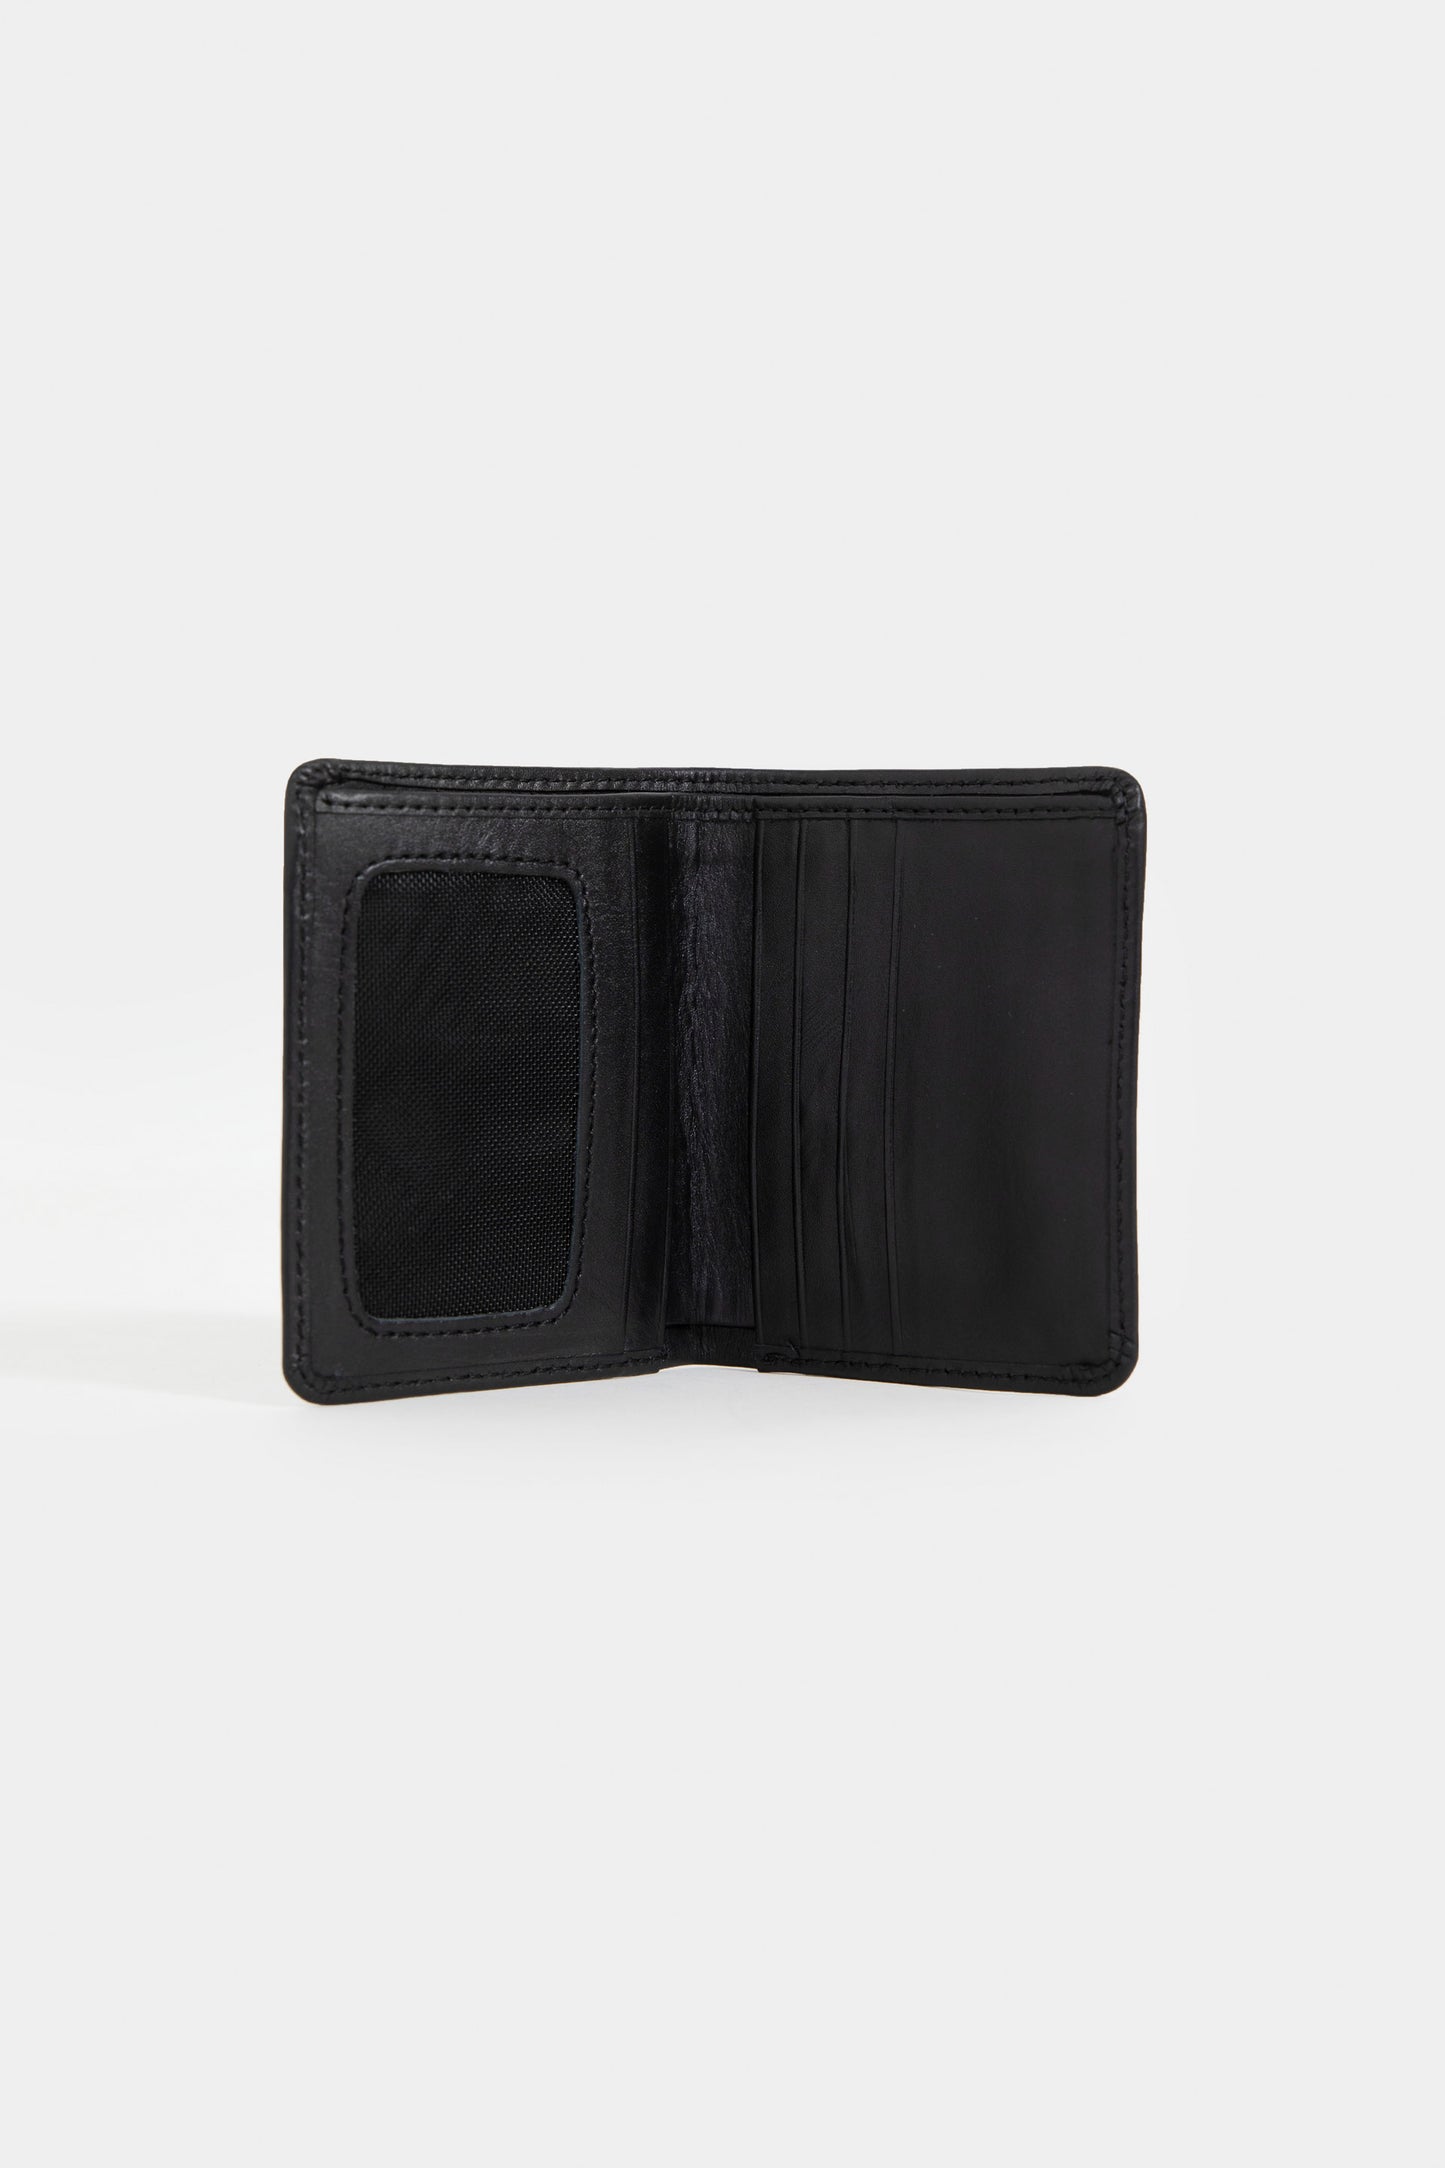 Leather card holder wallet